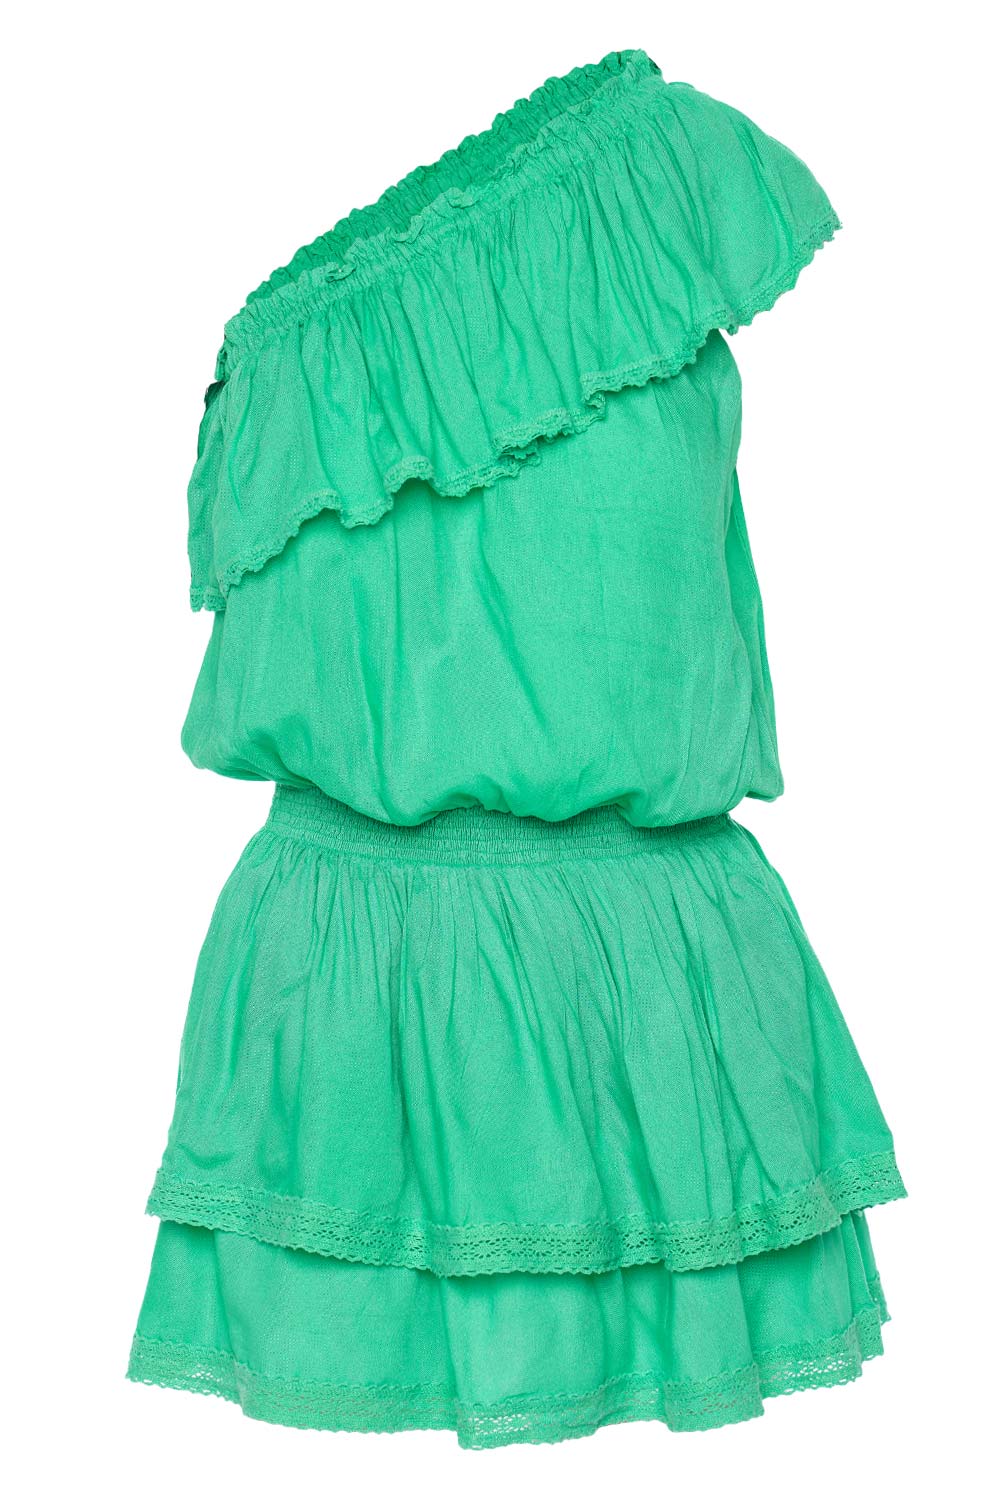 Melissa Odabash Debbie Green Ruffled One Shoulder Mini Dress